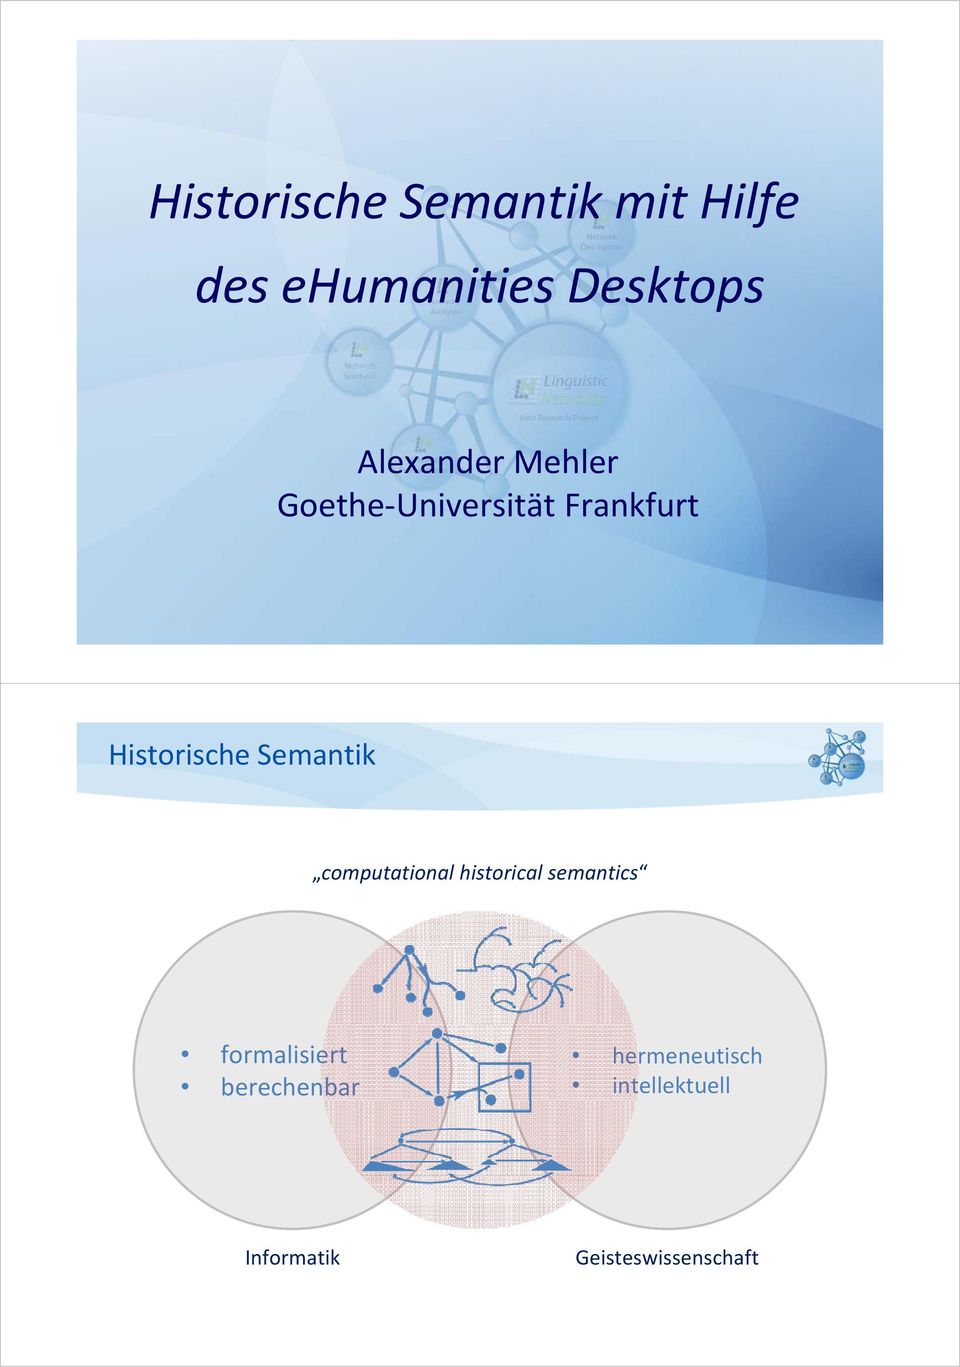 Humanities computational historical semantics formalisiert